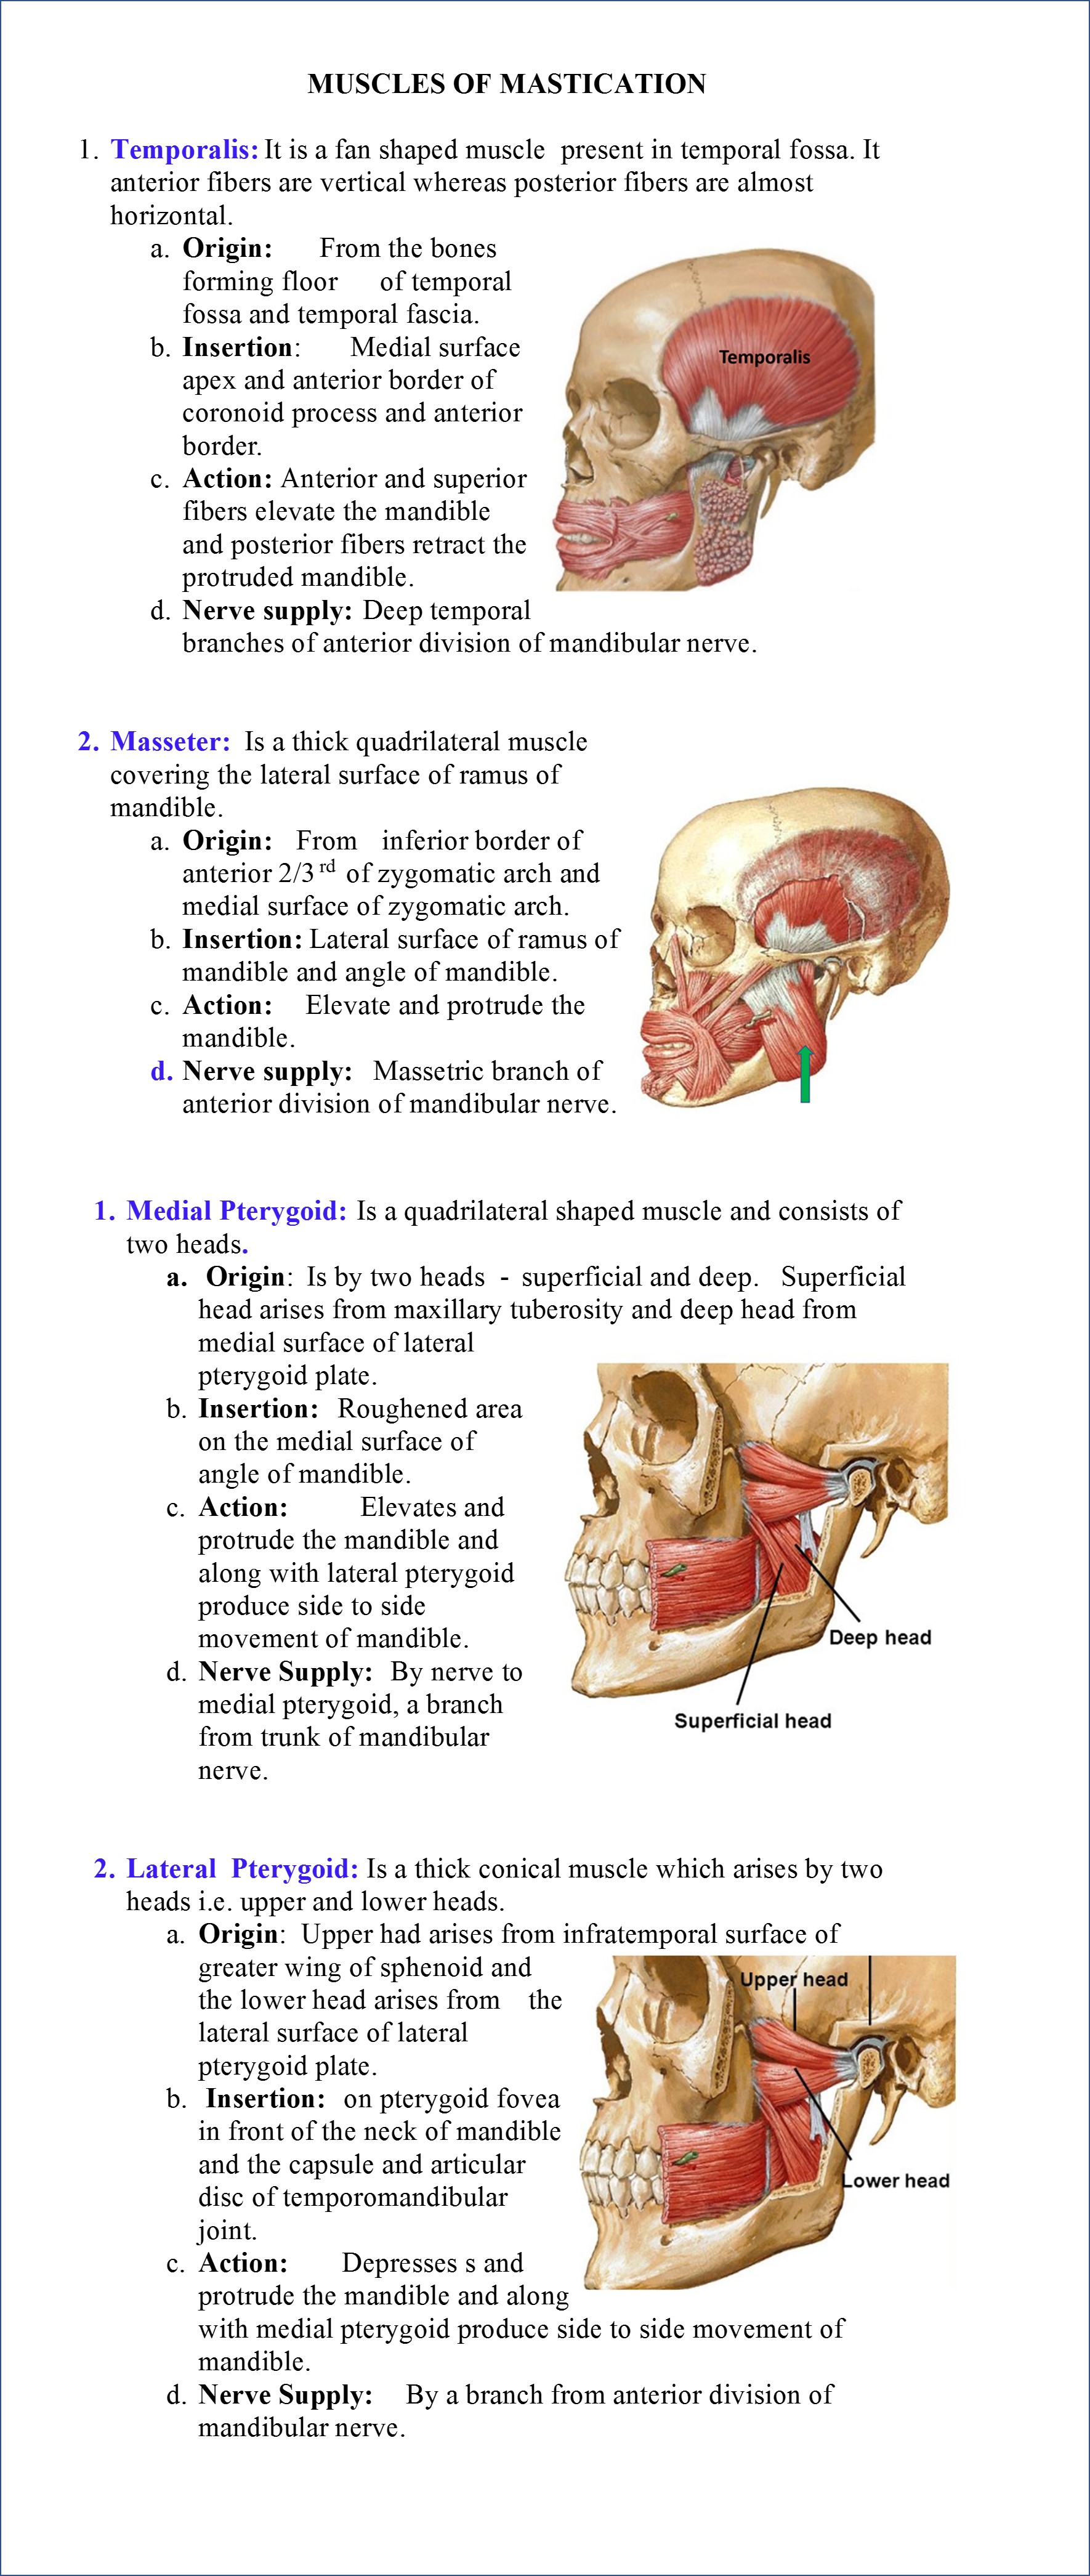 Muscles of Mastication and Temporomandibular Joint - Anatomy QA